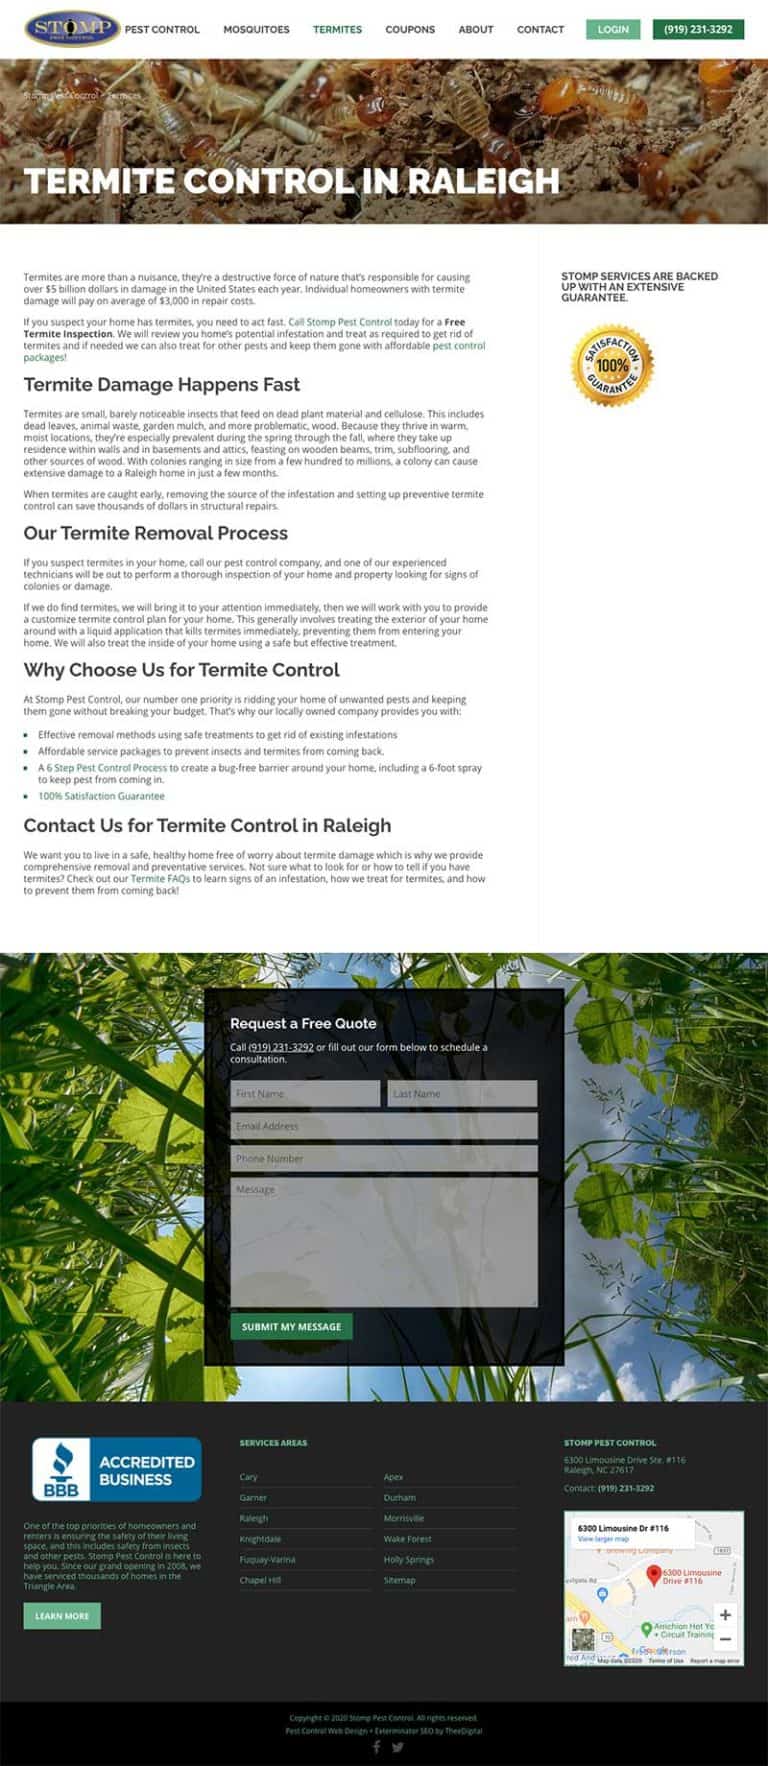 Mobile Friendly Web Design for Pest Control Company